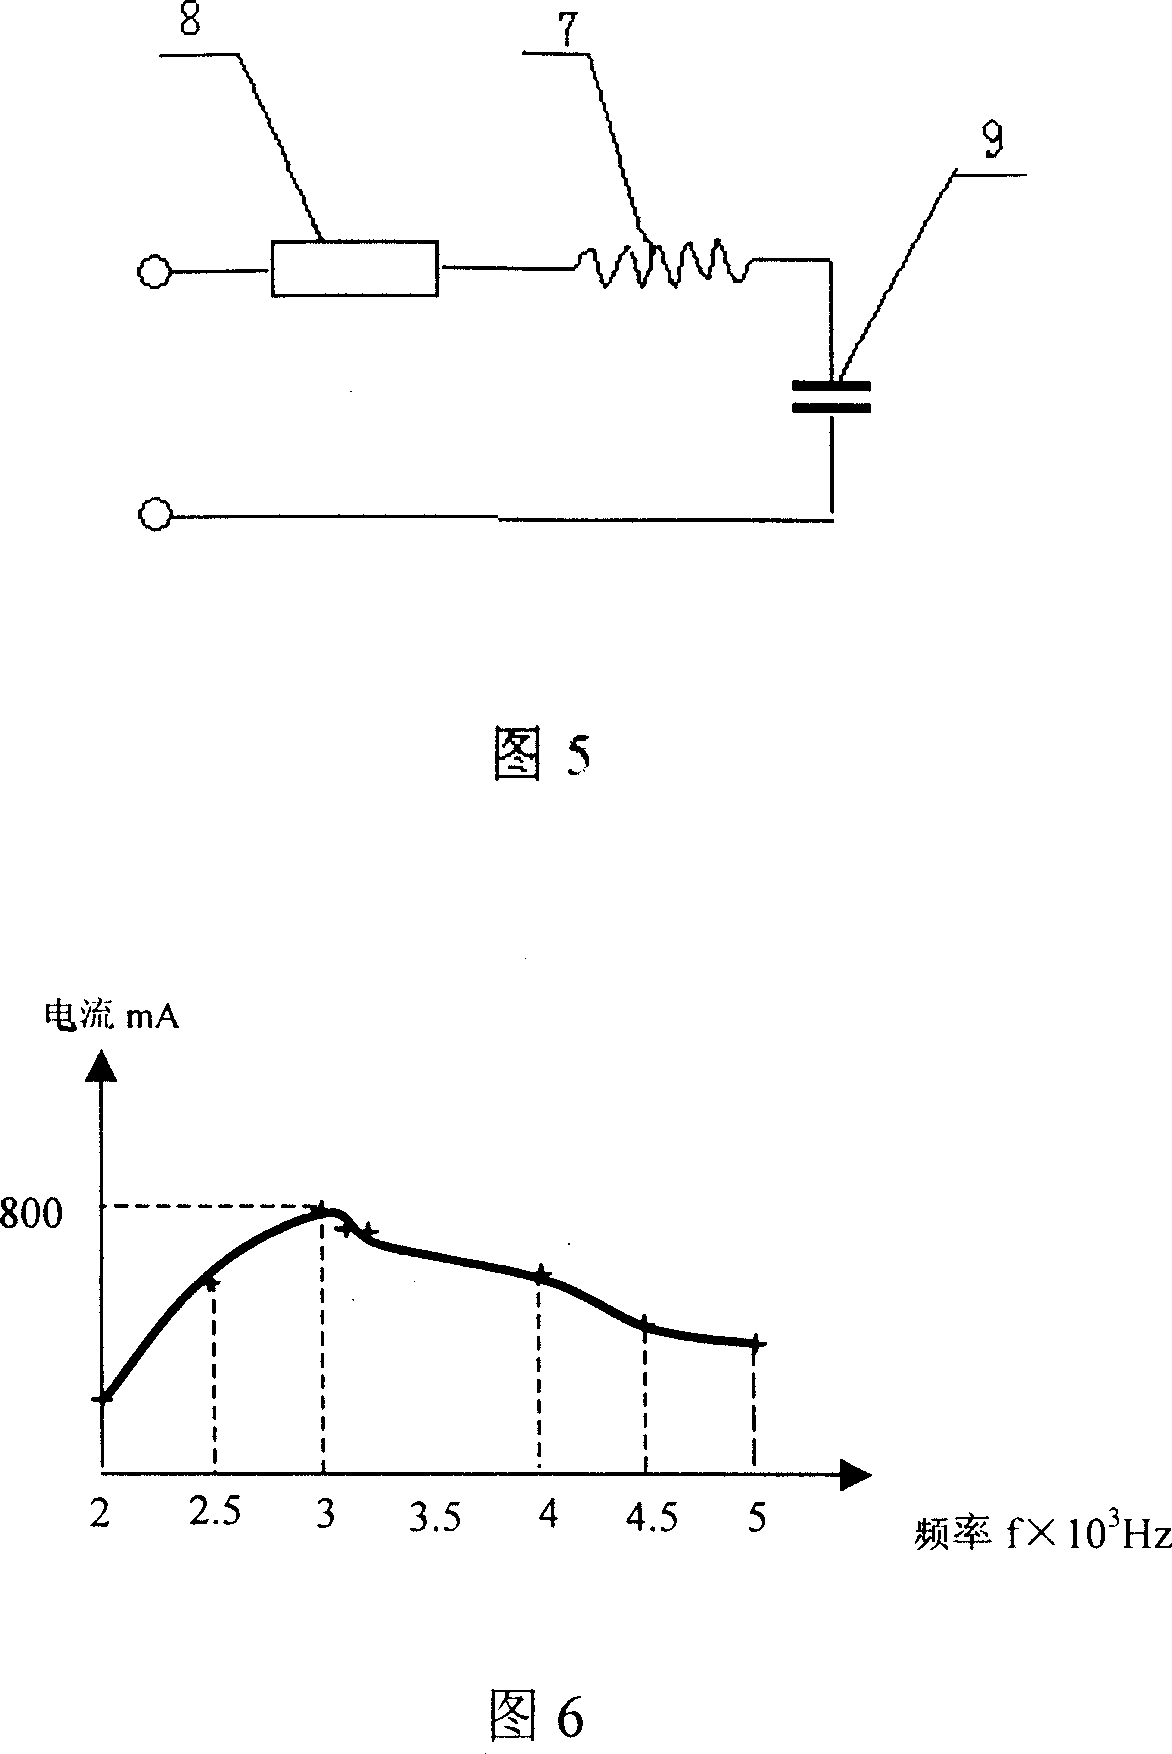 Static electromagnetic pump